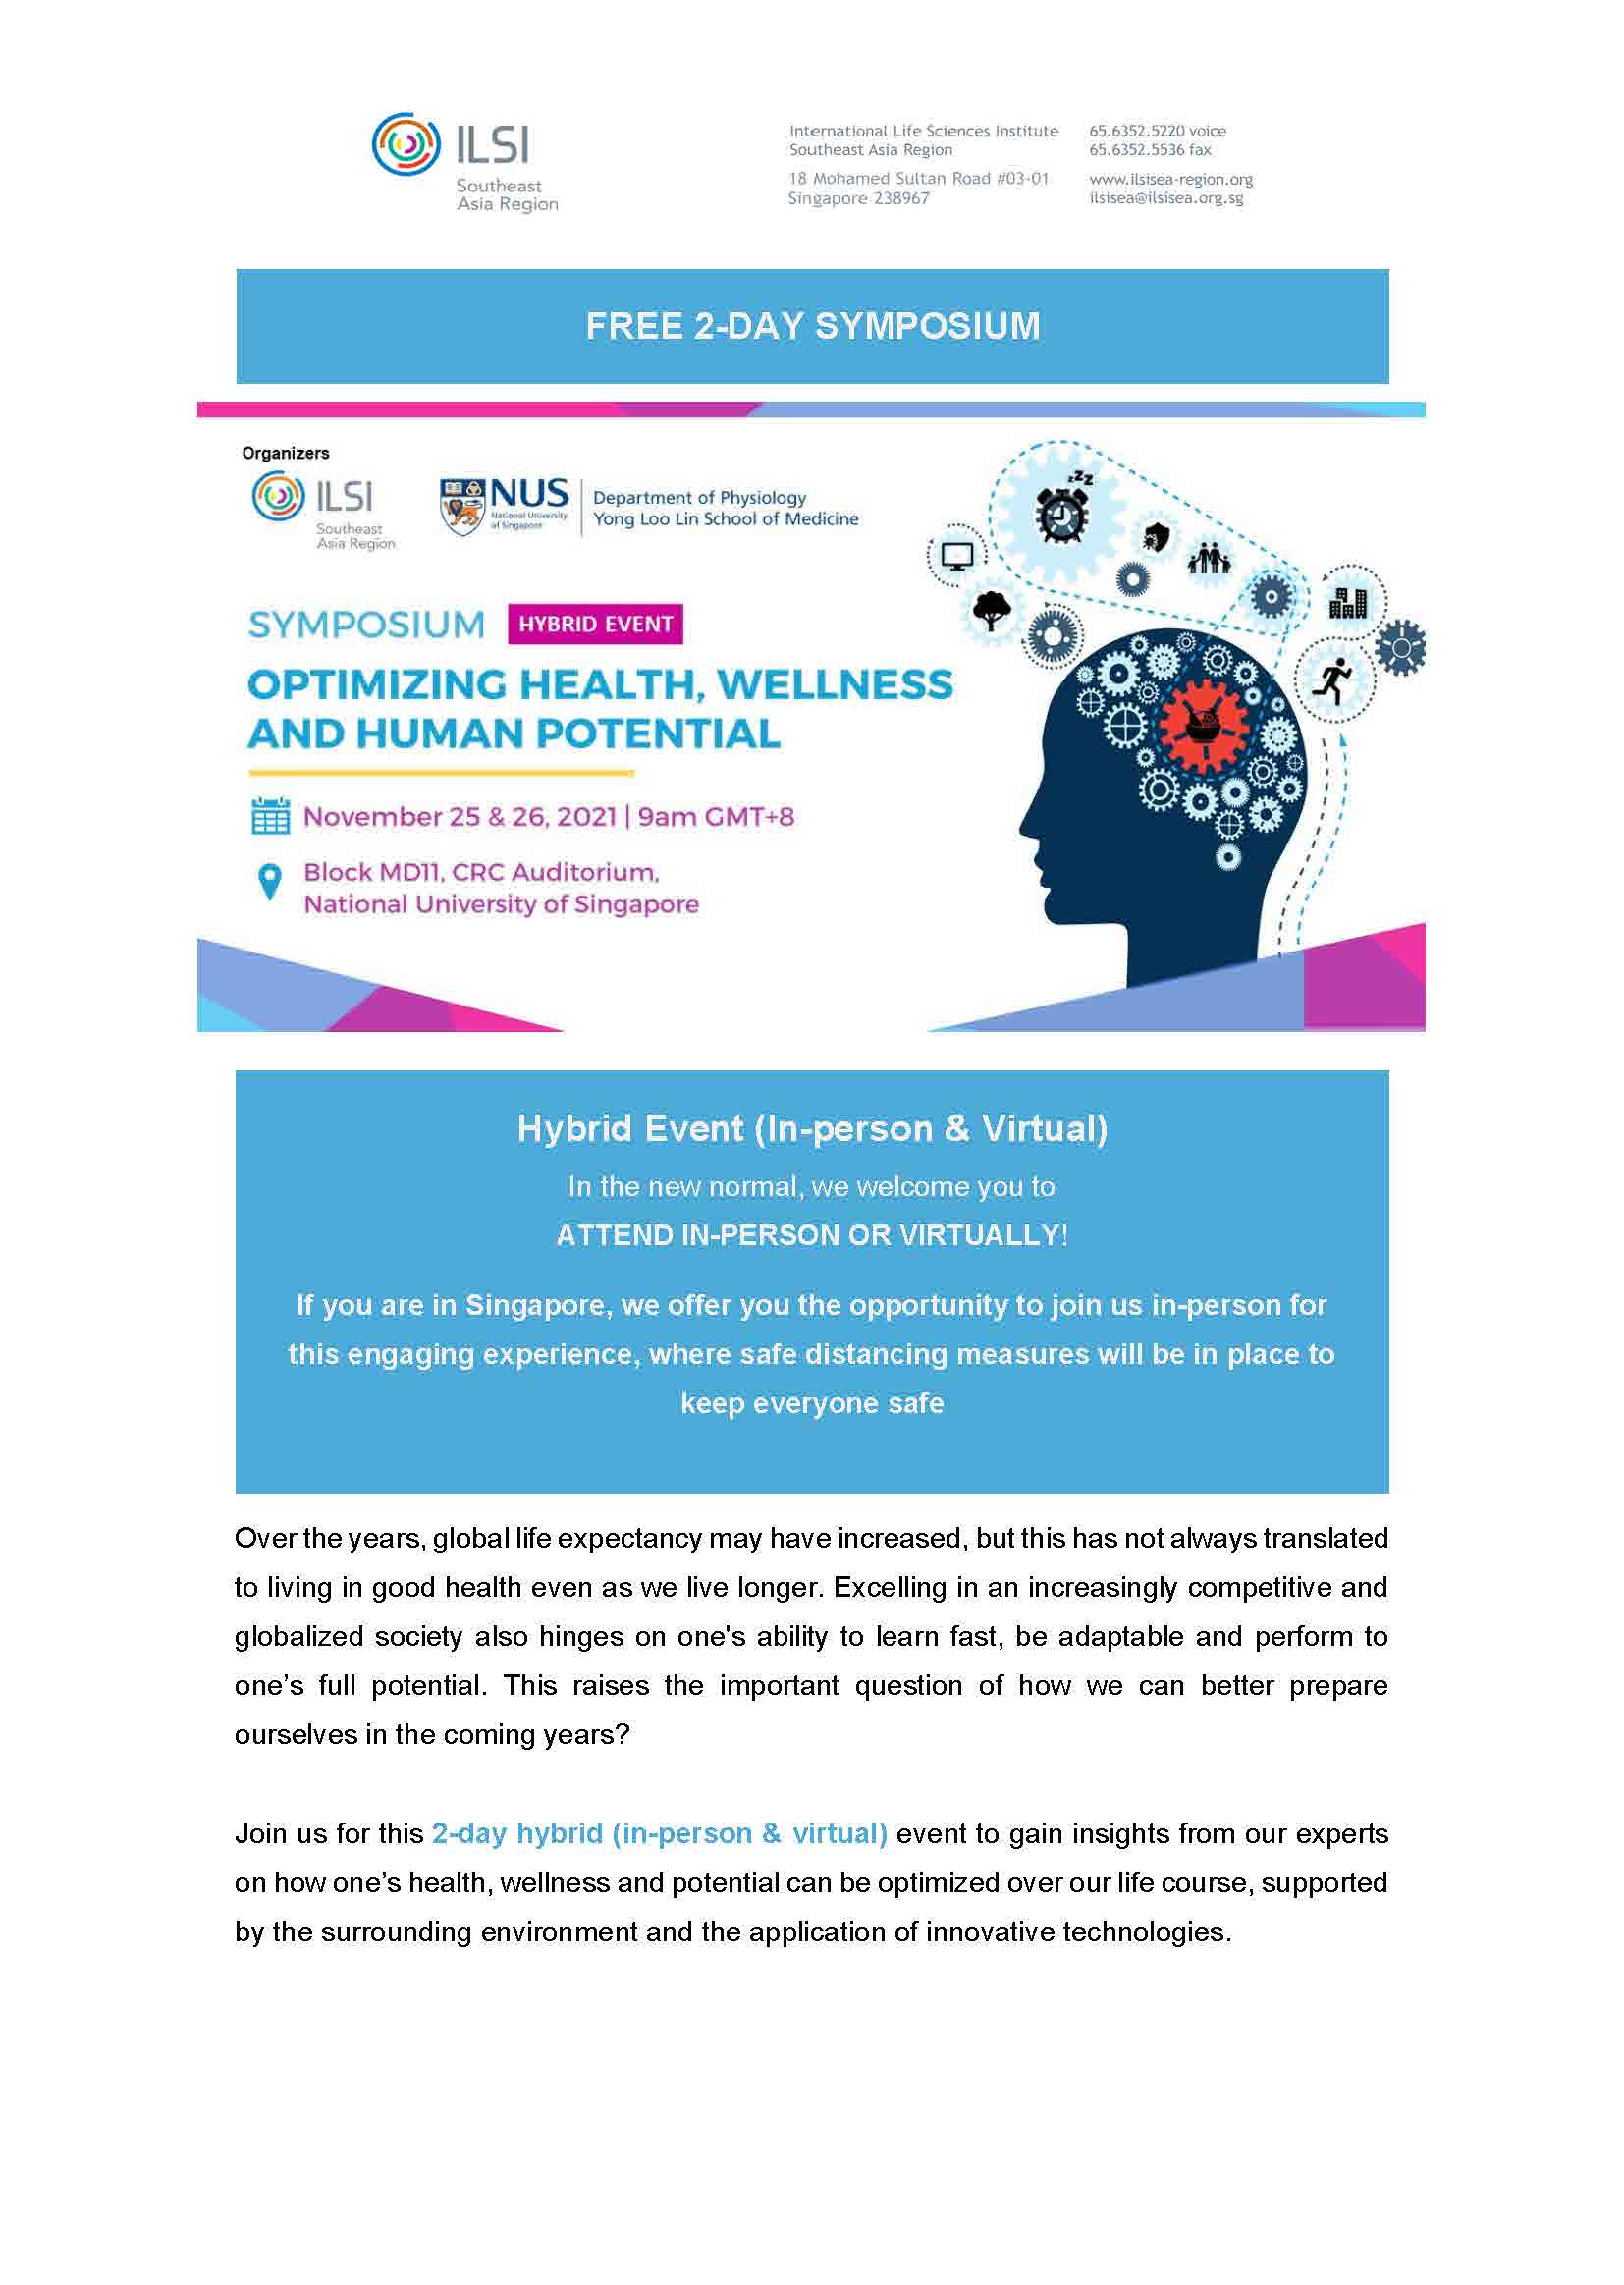 ILSI Symposium on Optimizing Health, Wellness and Human Potential